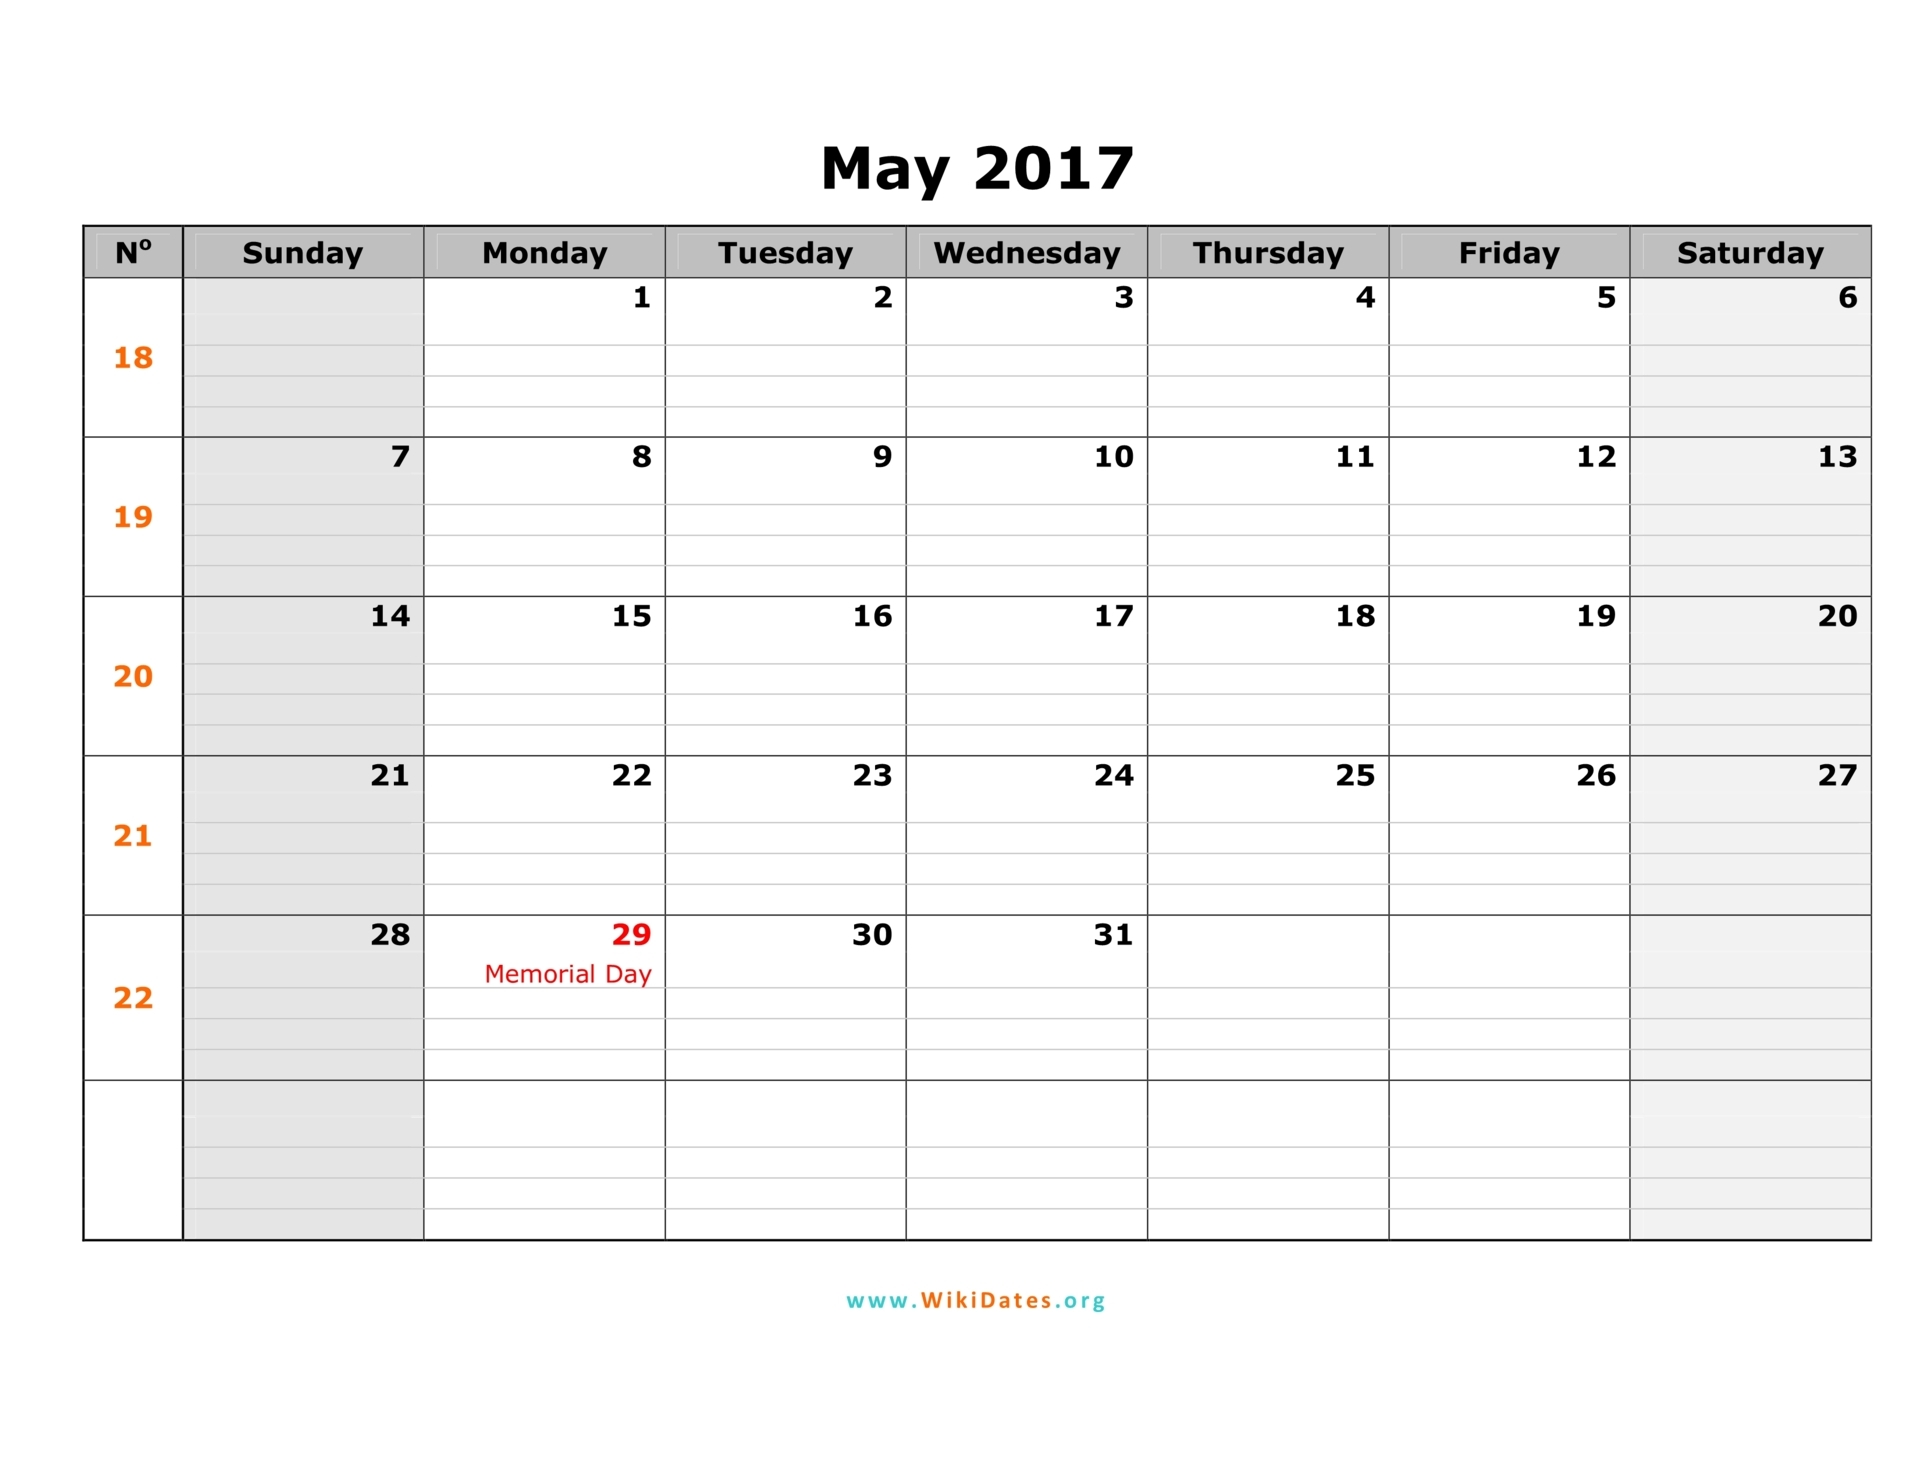 may-2017-calendar-wikidates